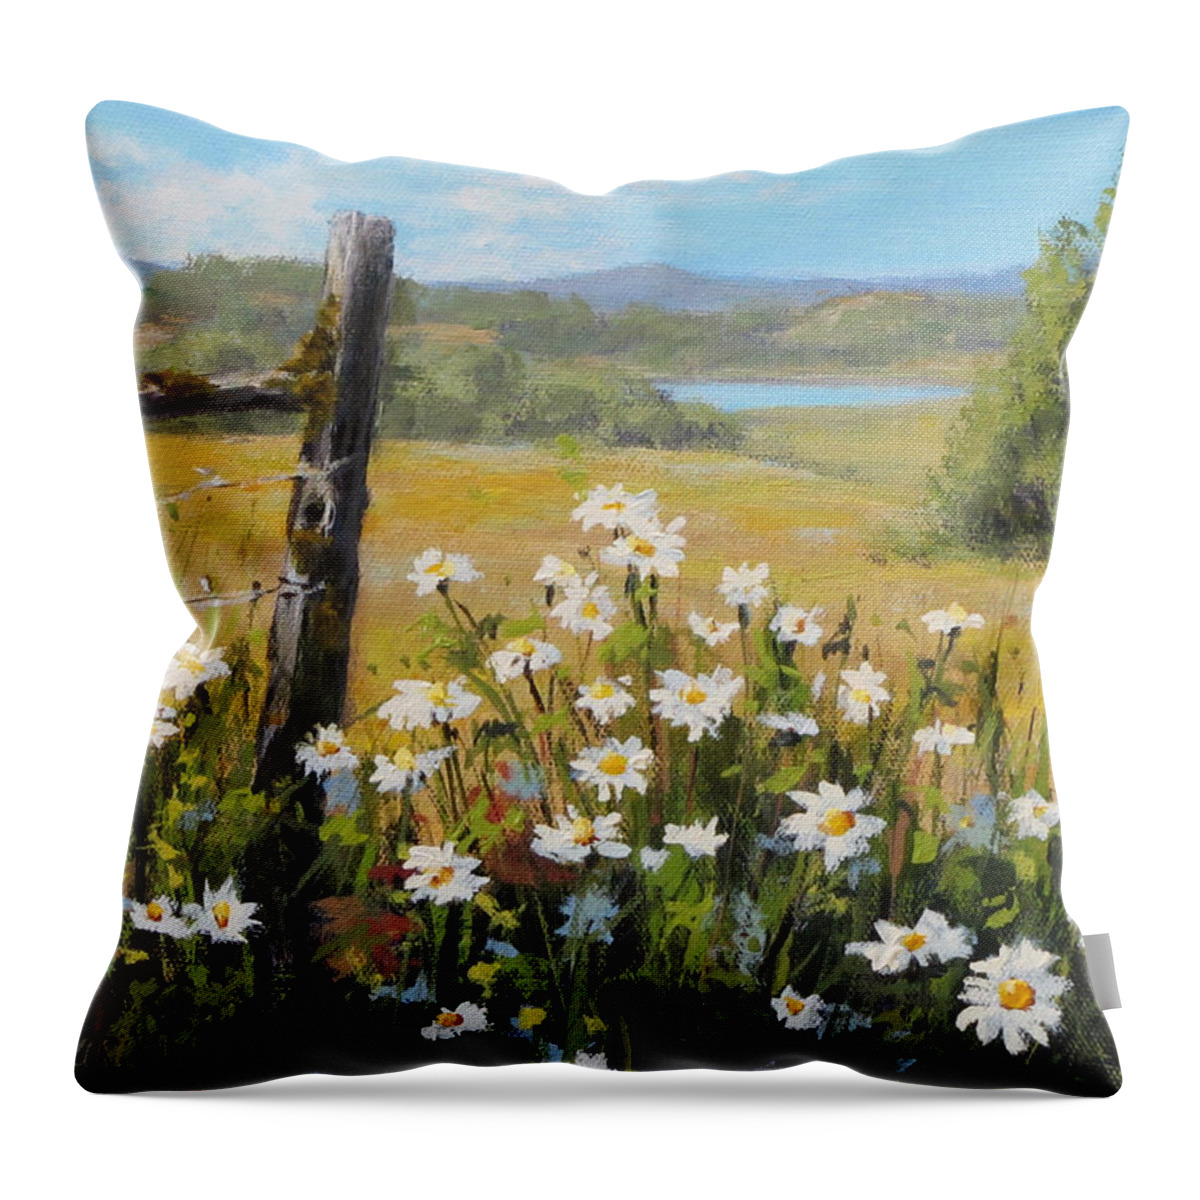 Original Throw Pillow featuring the painting Summer Daydream by Karen Ilari